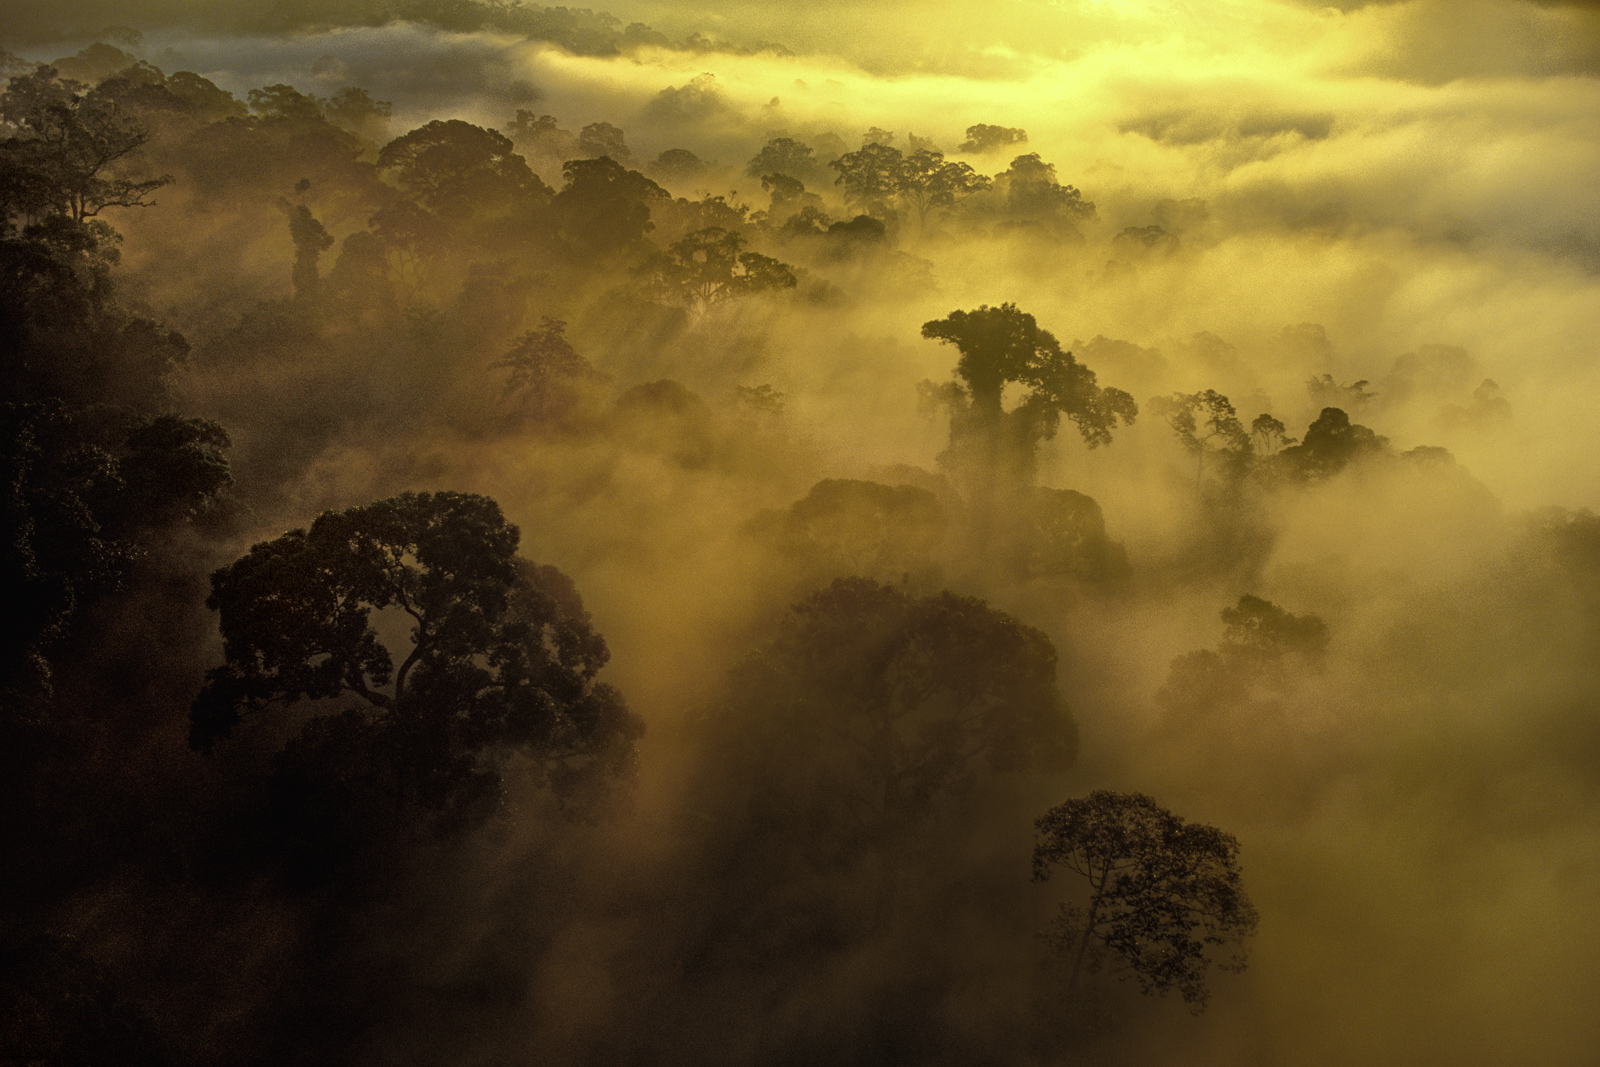 Morning mist over rainforest, Danum Valley Conservation Area, Borneo